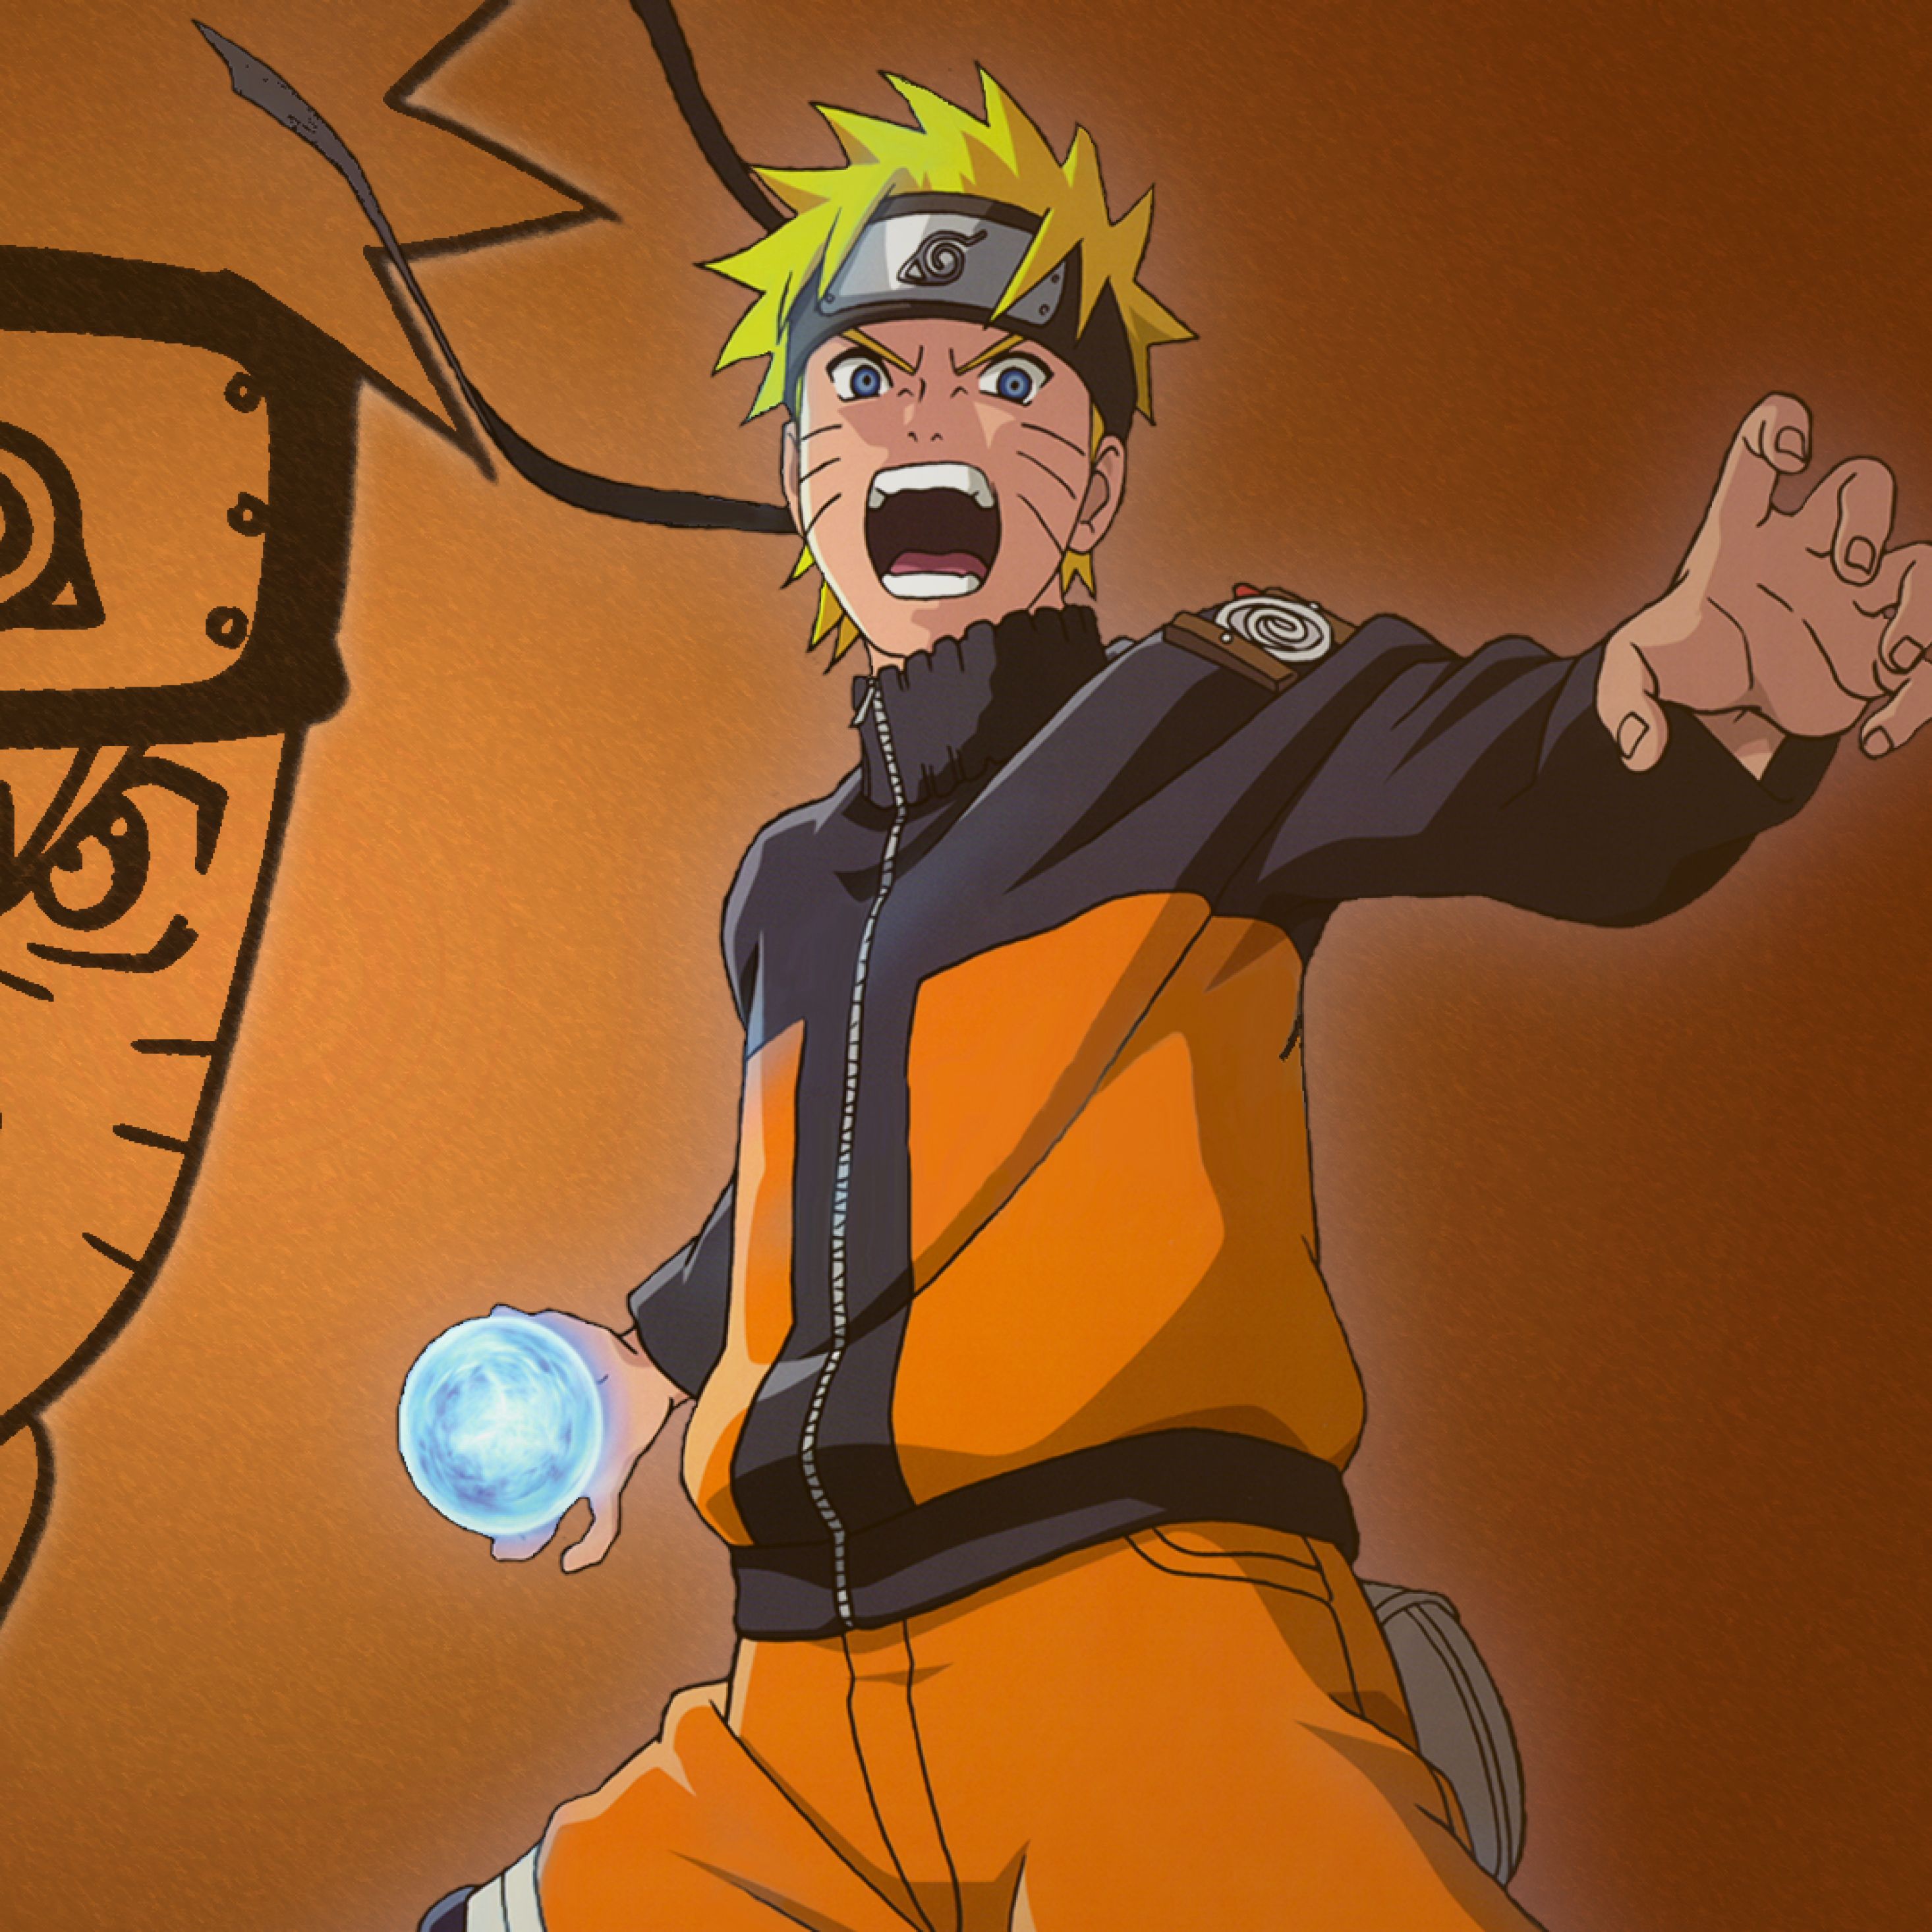 Naruto Uzumaki Rasengan iPad Pro Retina Display Wallpaper, HD Anime 4K Wallpaper, Image, Photo and Background